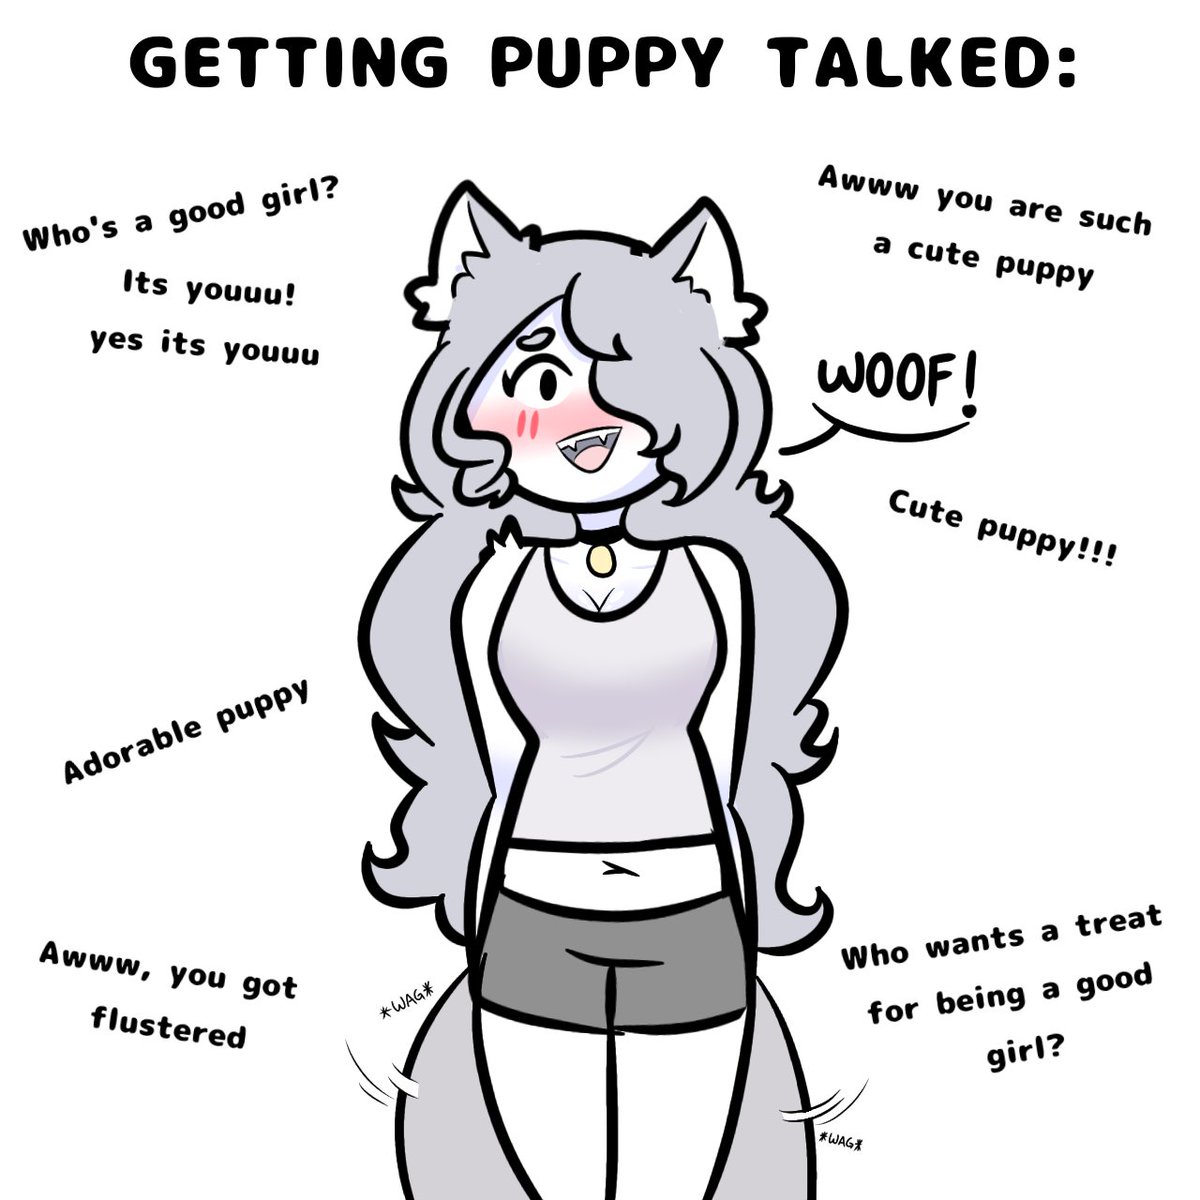 Puppy talk makes me happy 😖❤️